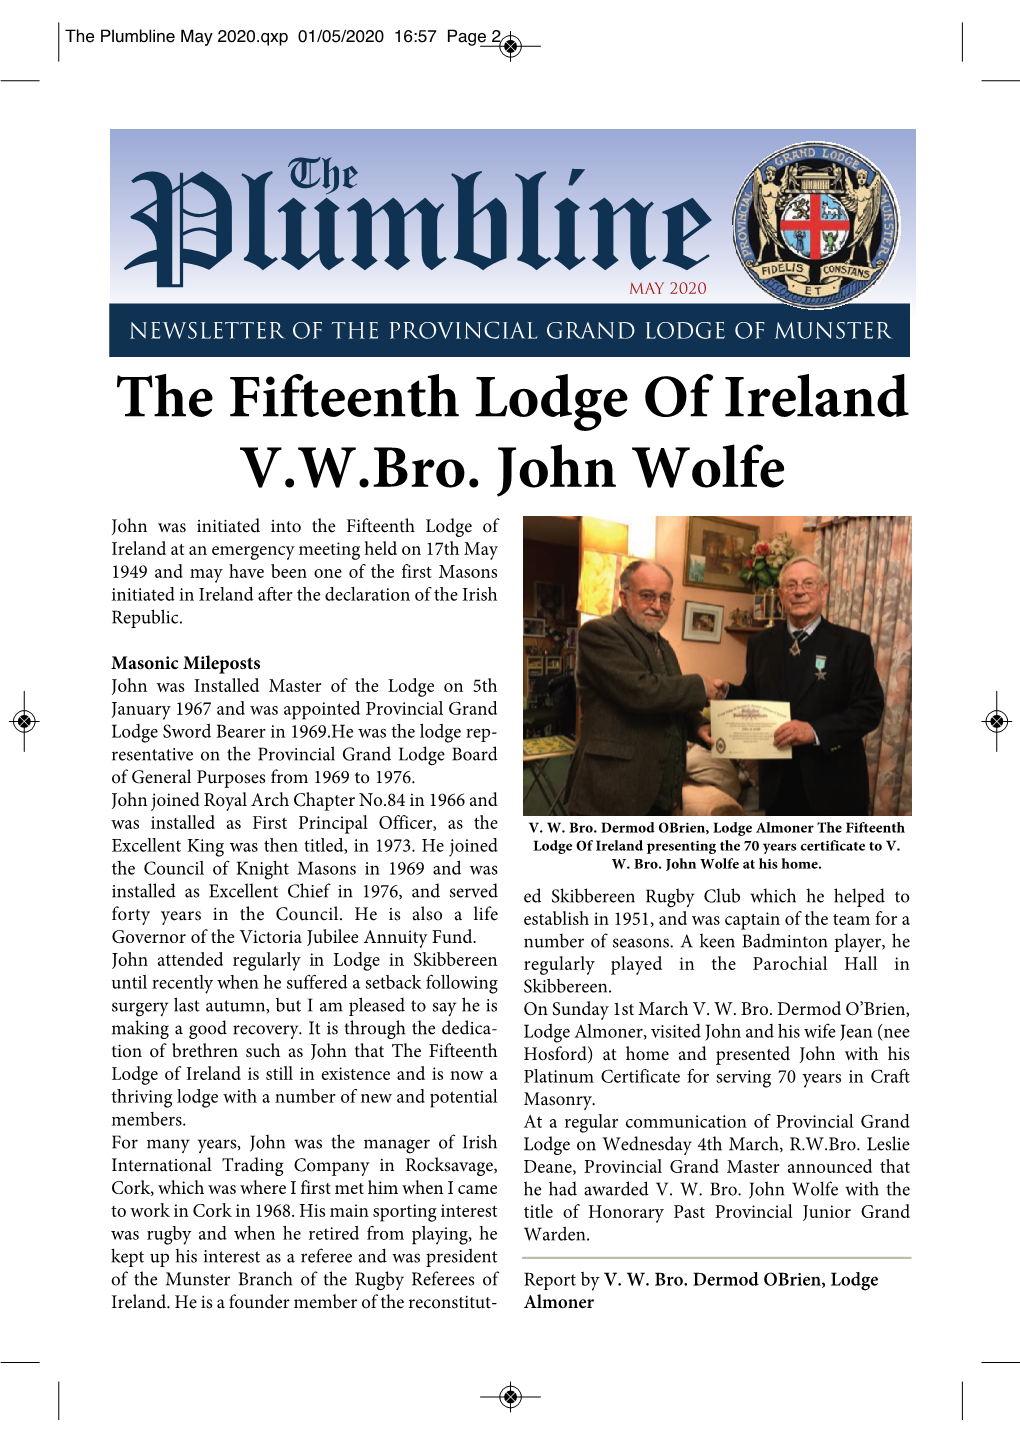 The Fifteenth Lodge of Ireland V.W.Bro. John Wolfe